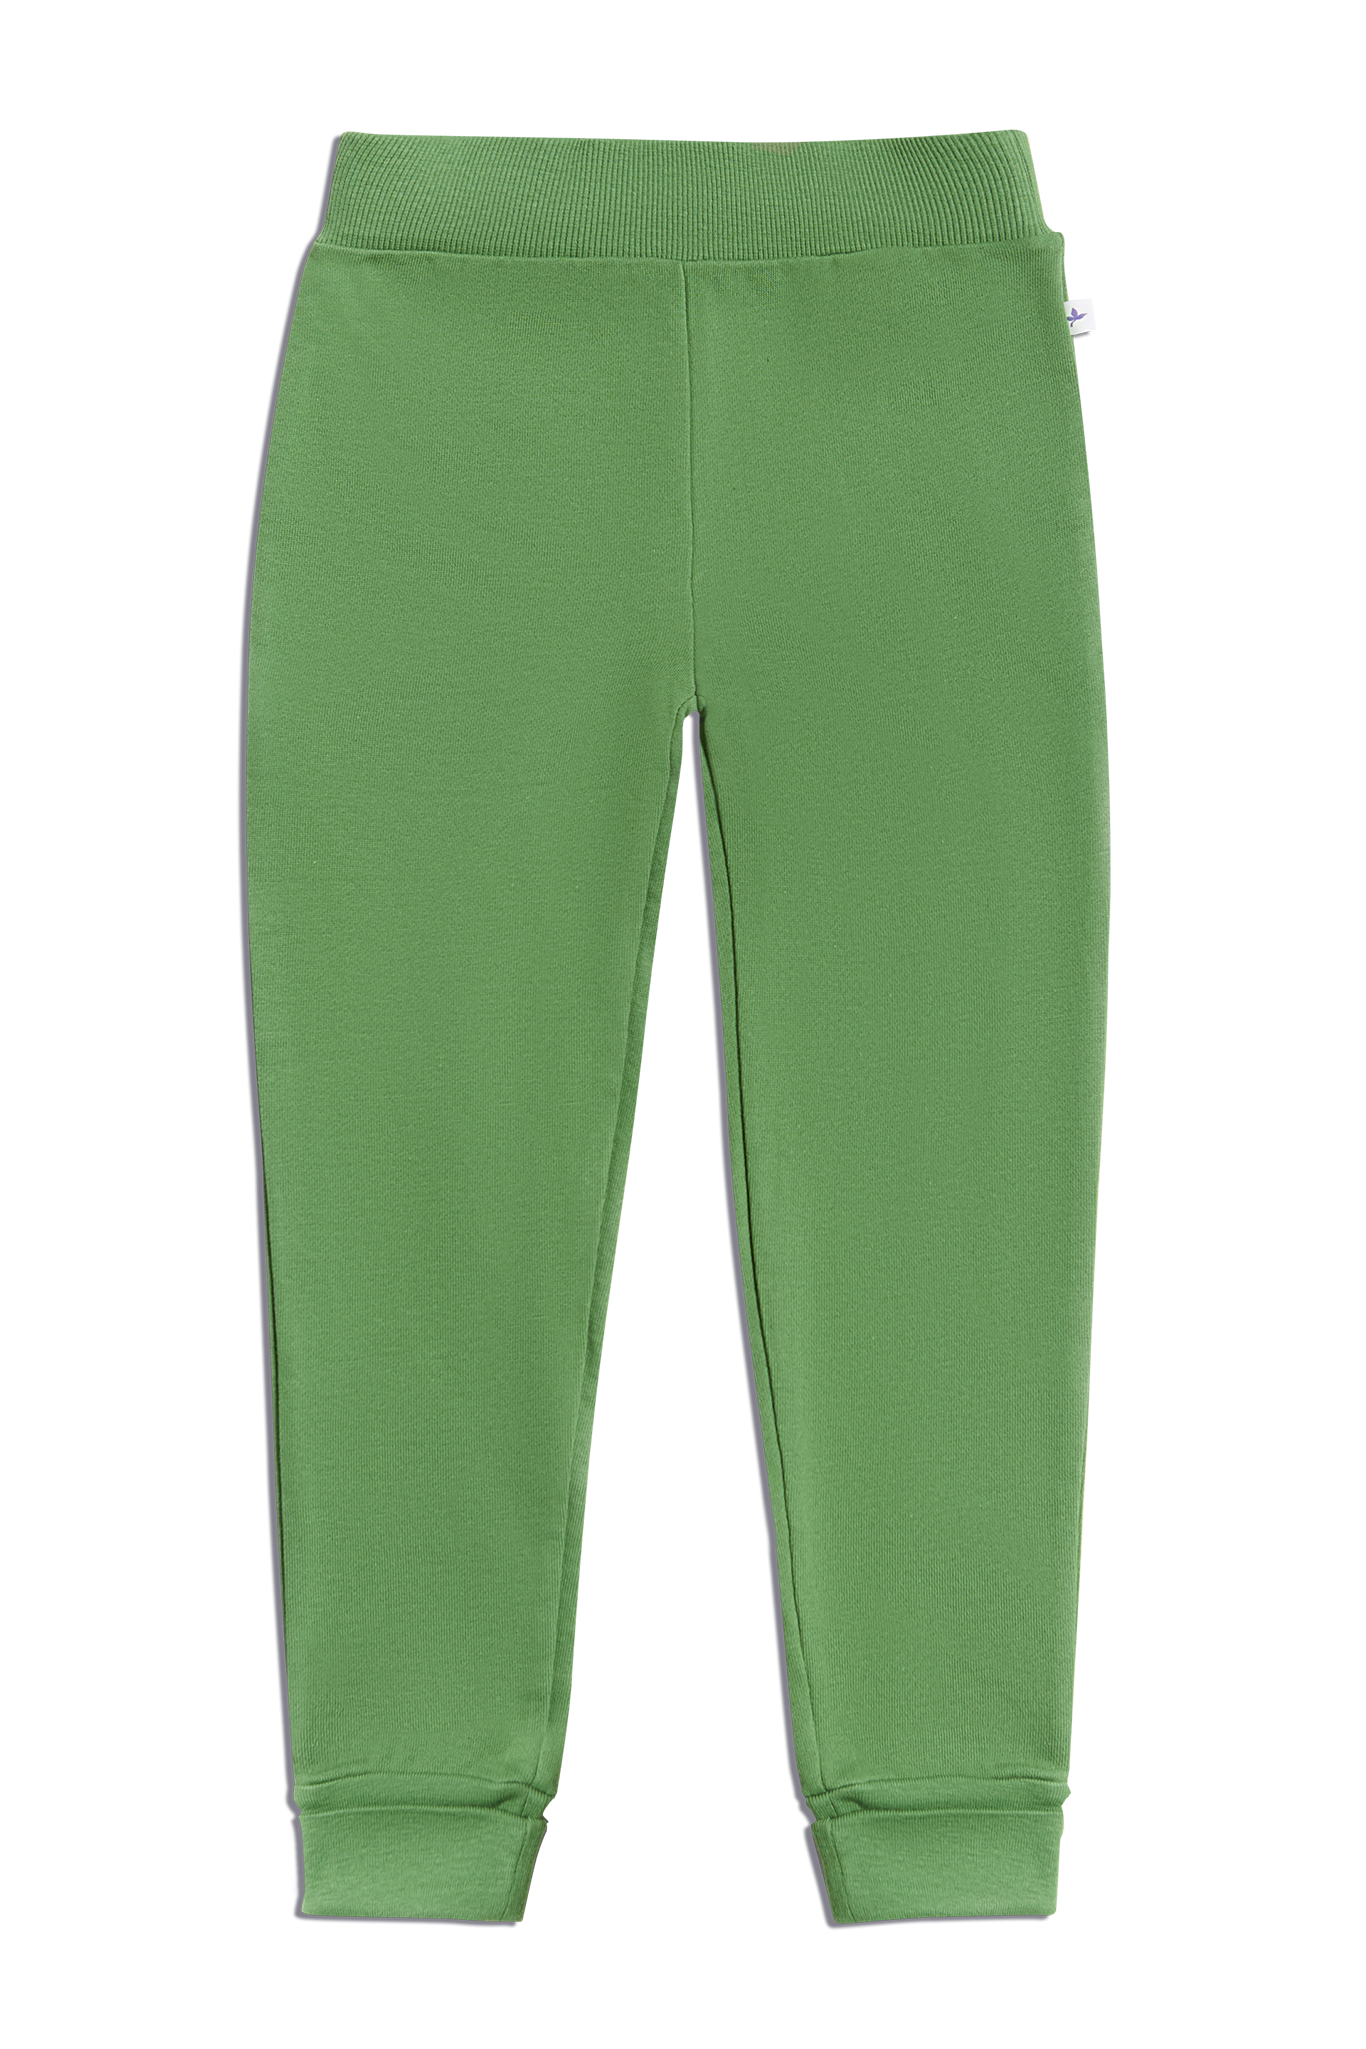 Leela Cotton - Sweathose waldgrün